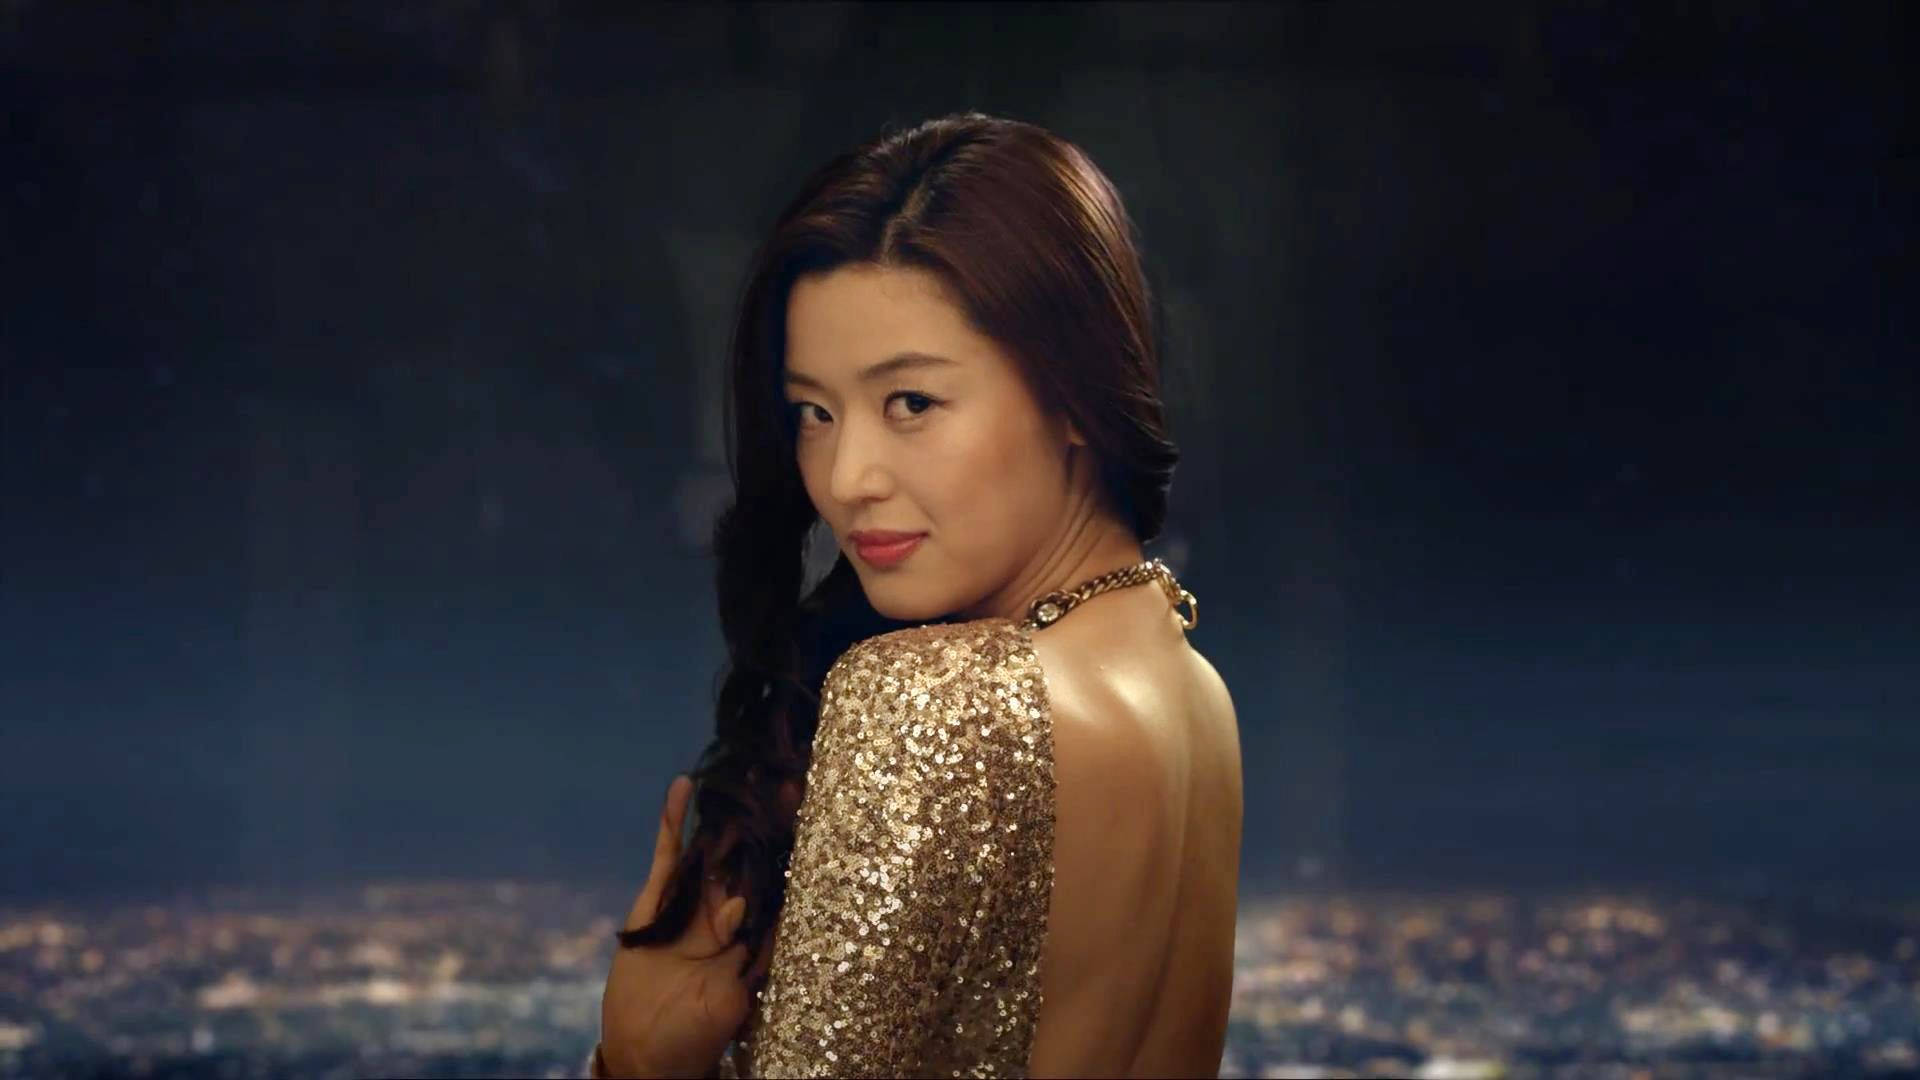 Junji Hyun En Un Elegante Vestido Glamoroso. Fondo de pantalla